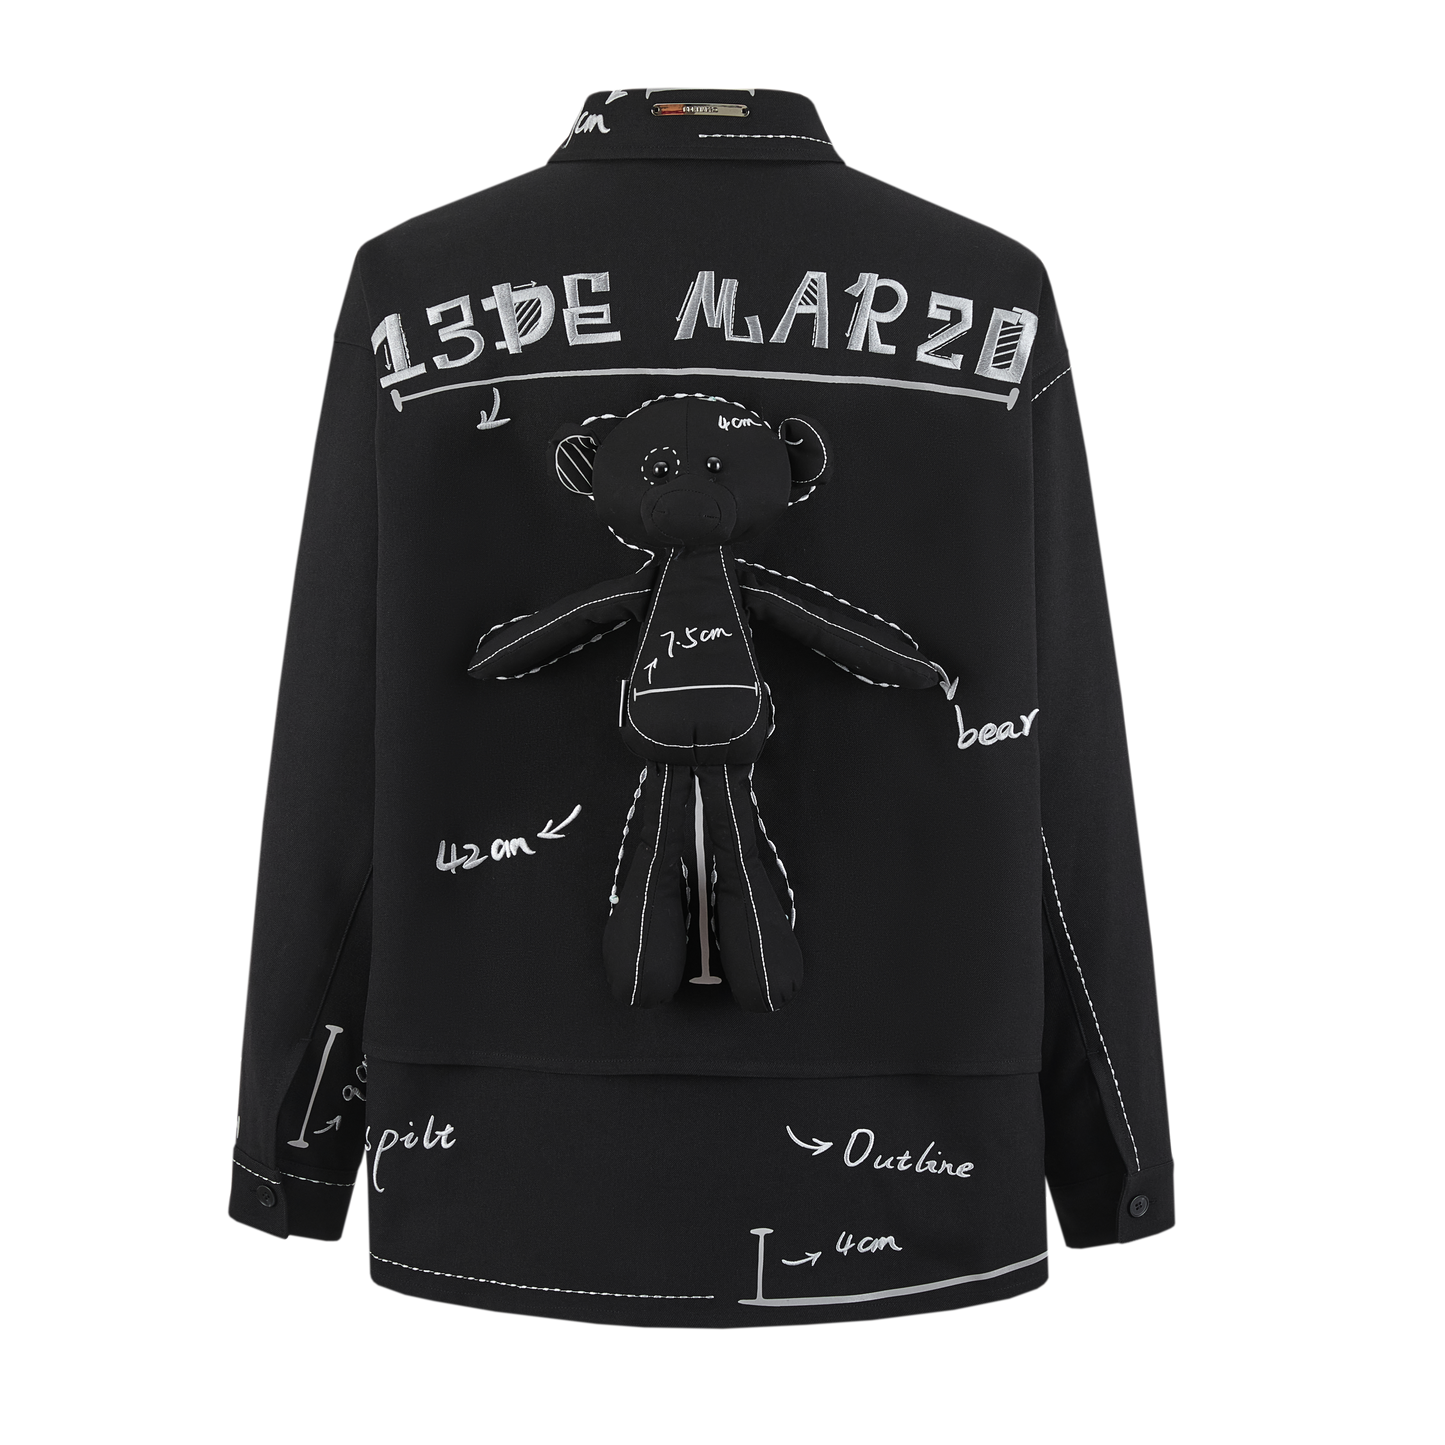 13DE MARZO Sketch Line Shirt